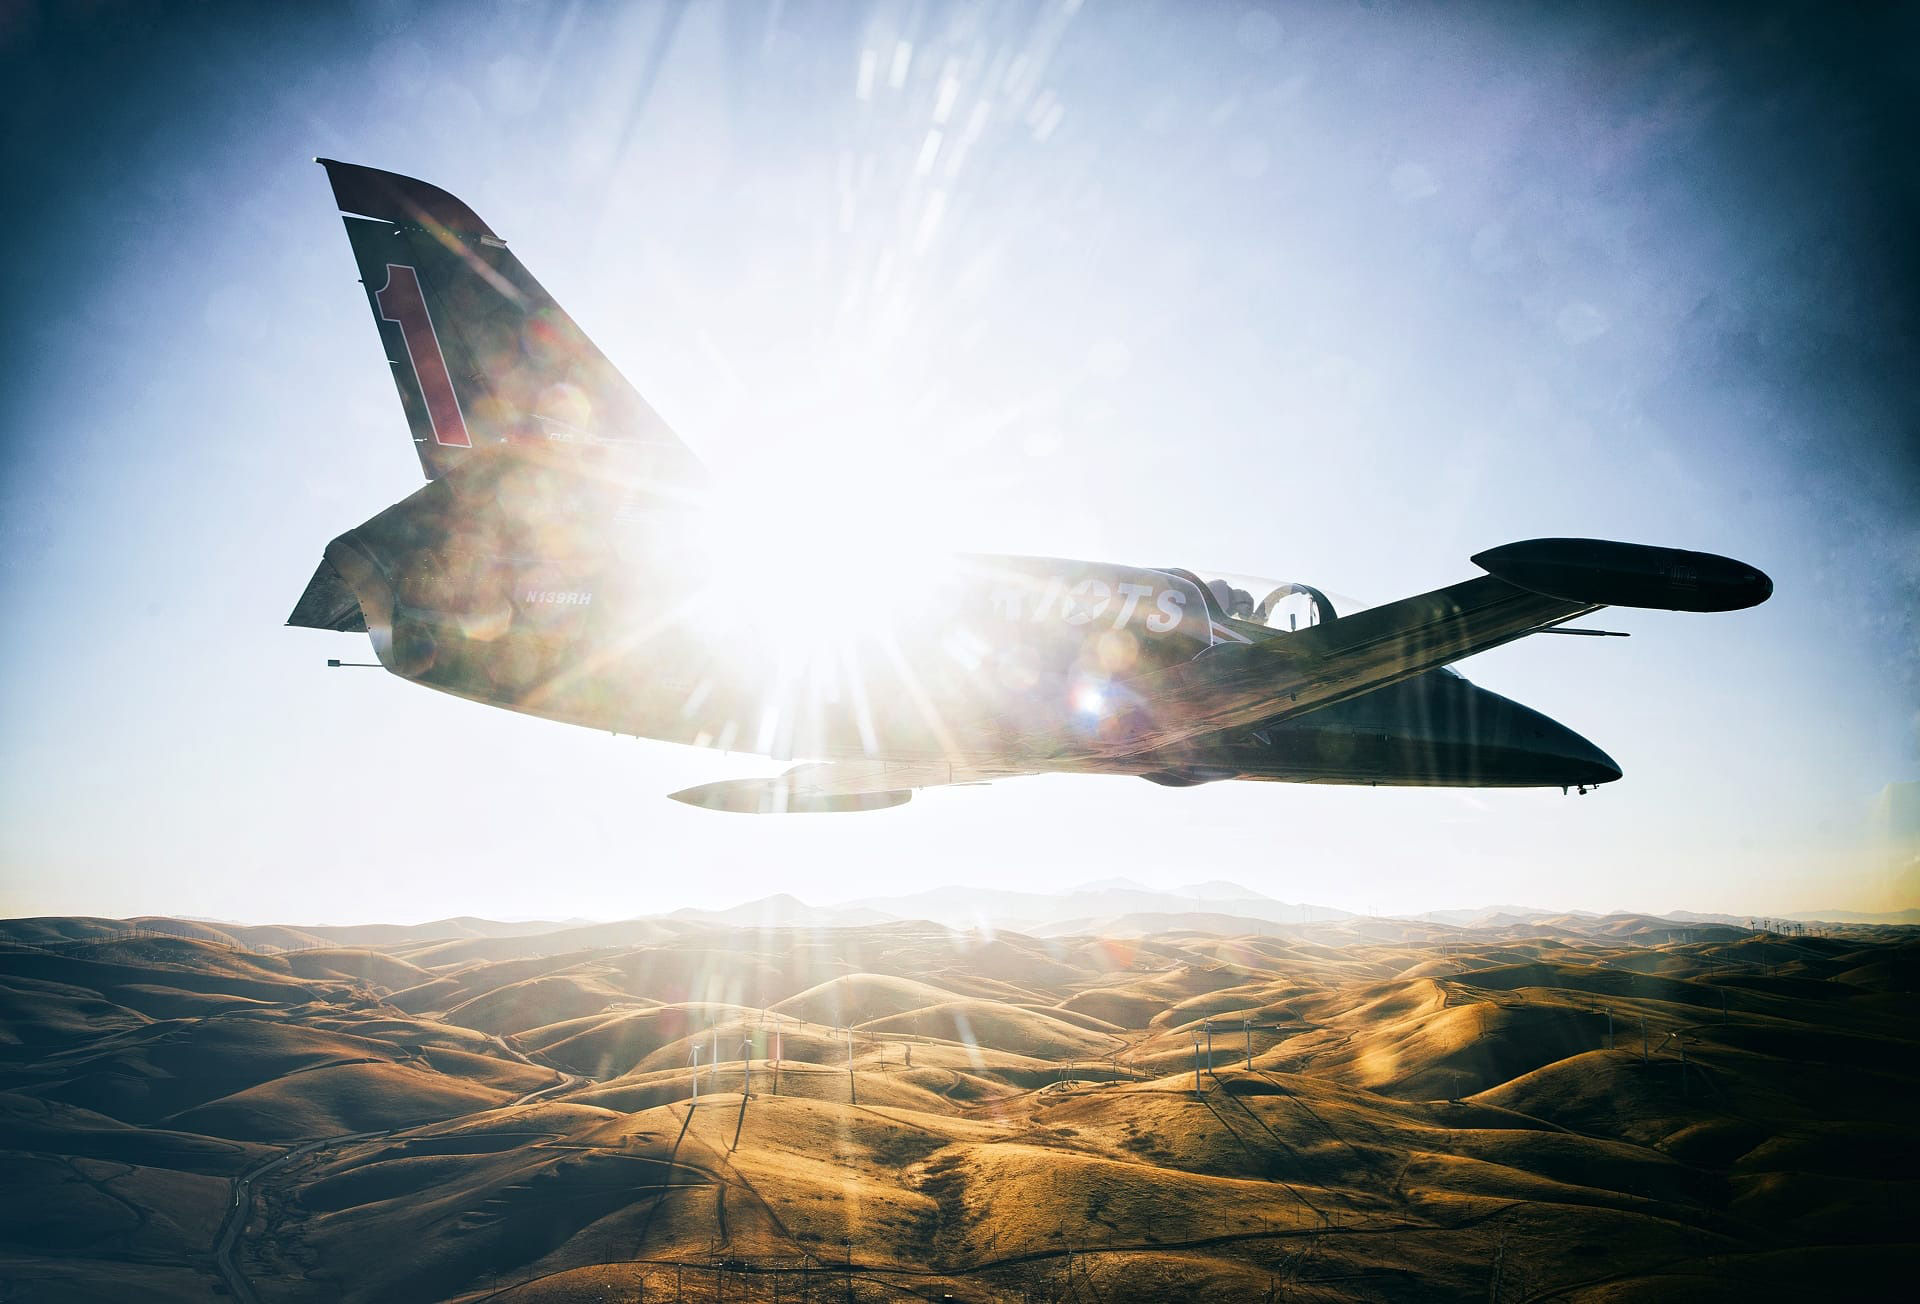 Advertising Photographer Blair Bunting photographs from Jet to Jet like Top Gun